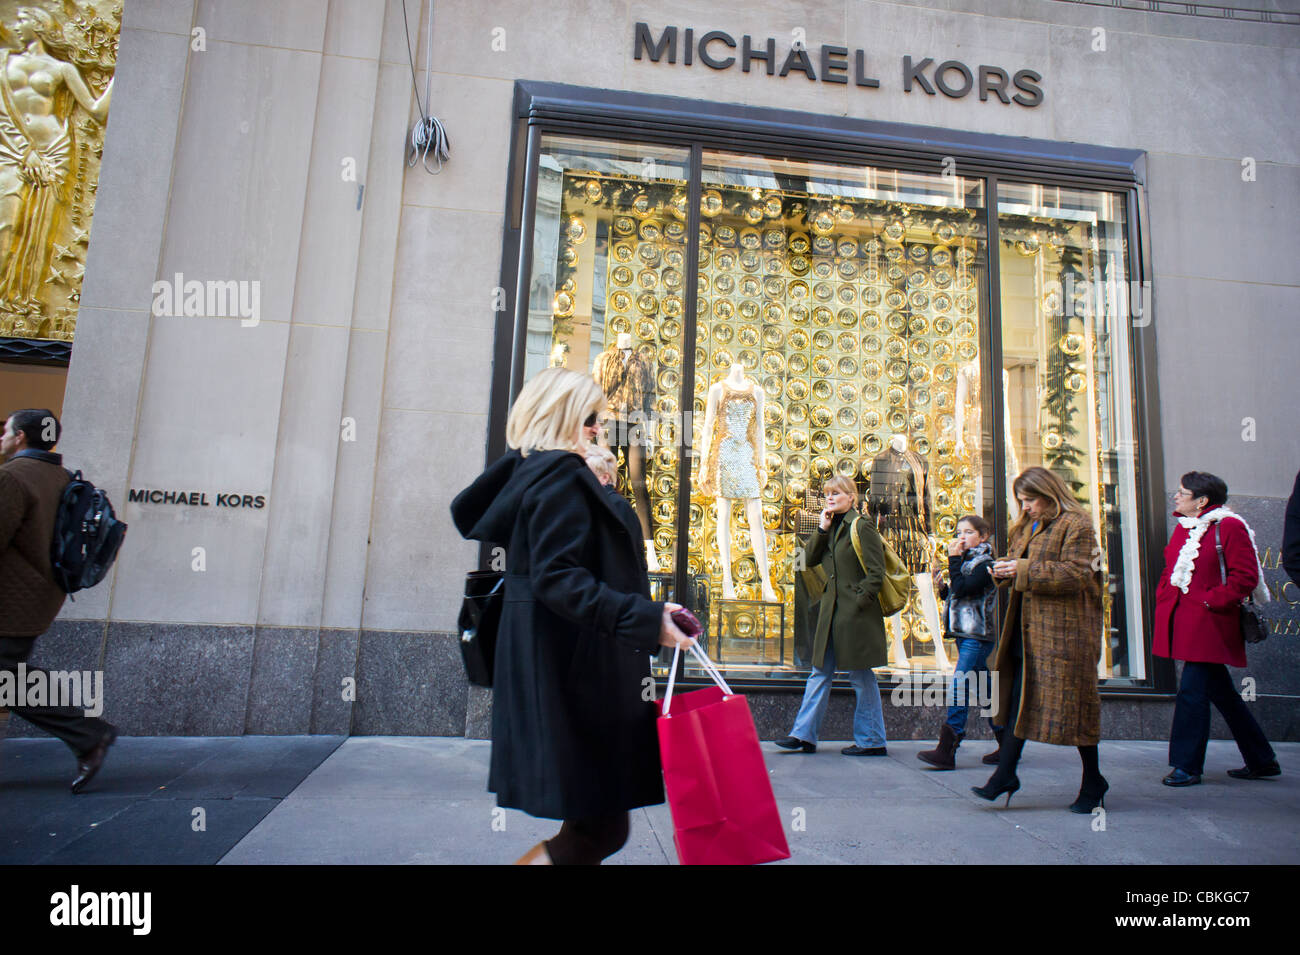 michael kors stores in new york